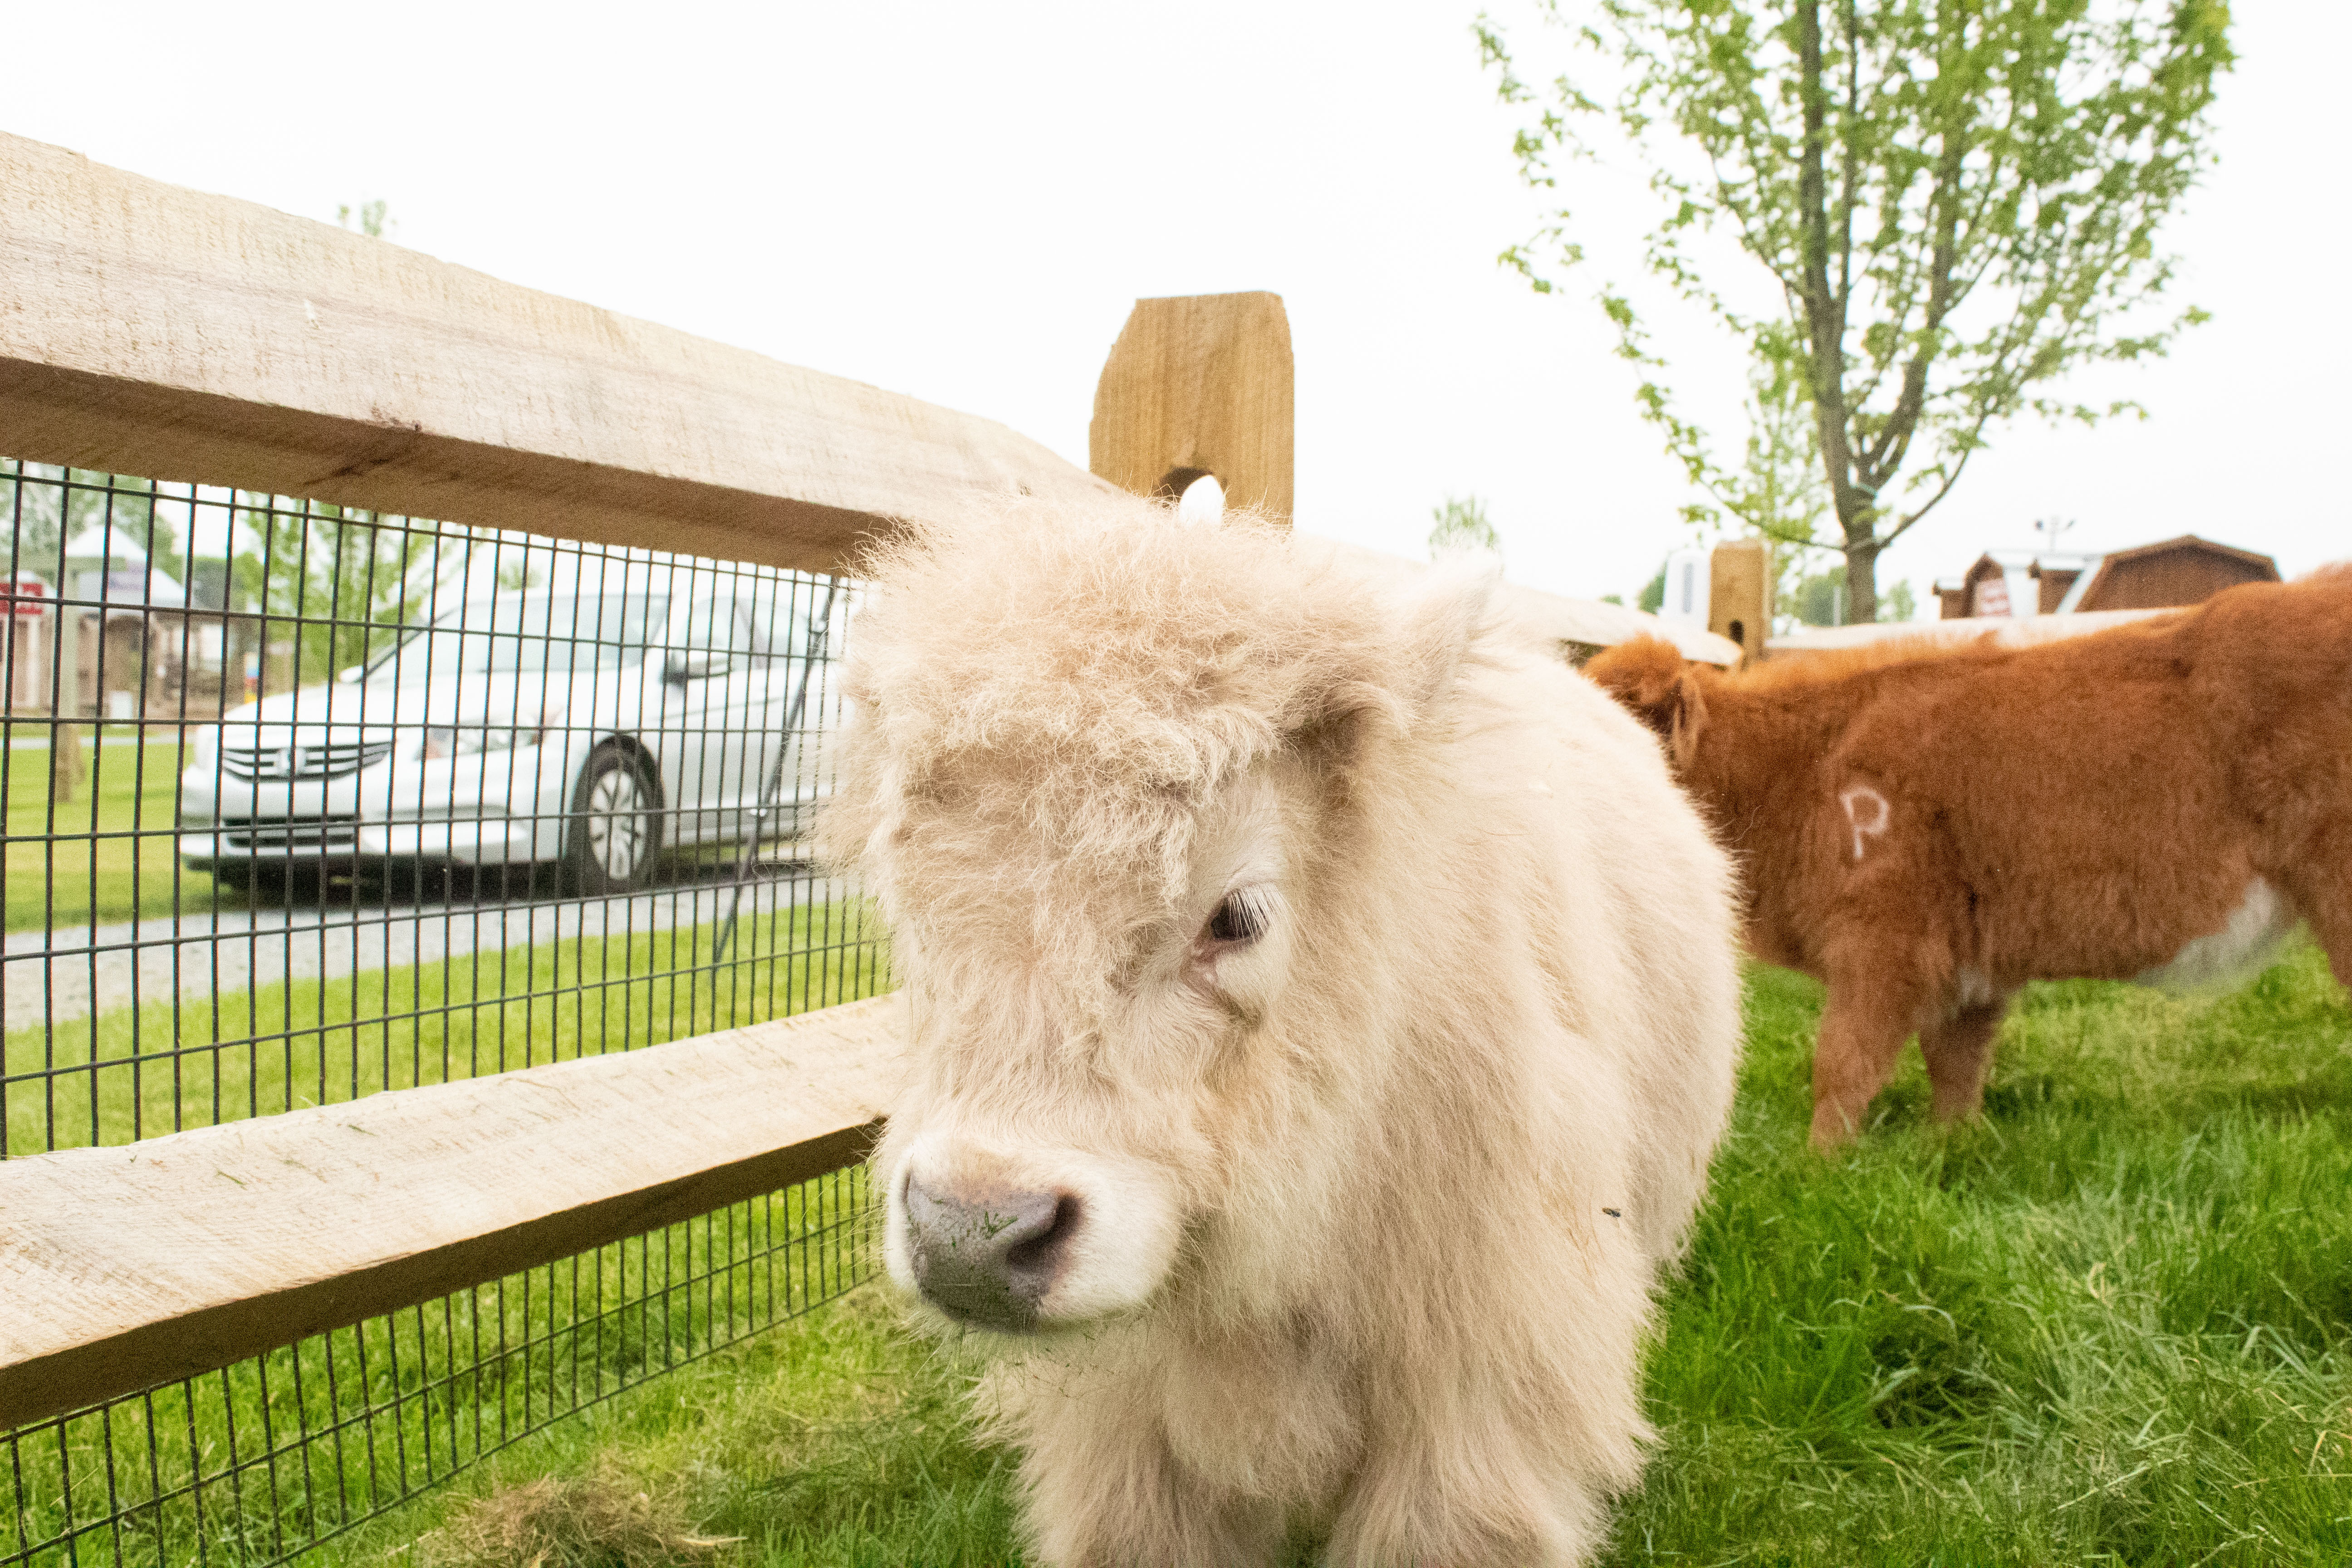 Micro-Highland Cow Experience, Udderly Ridiculous Farm Life